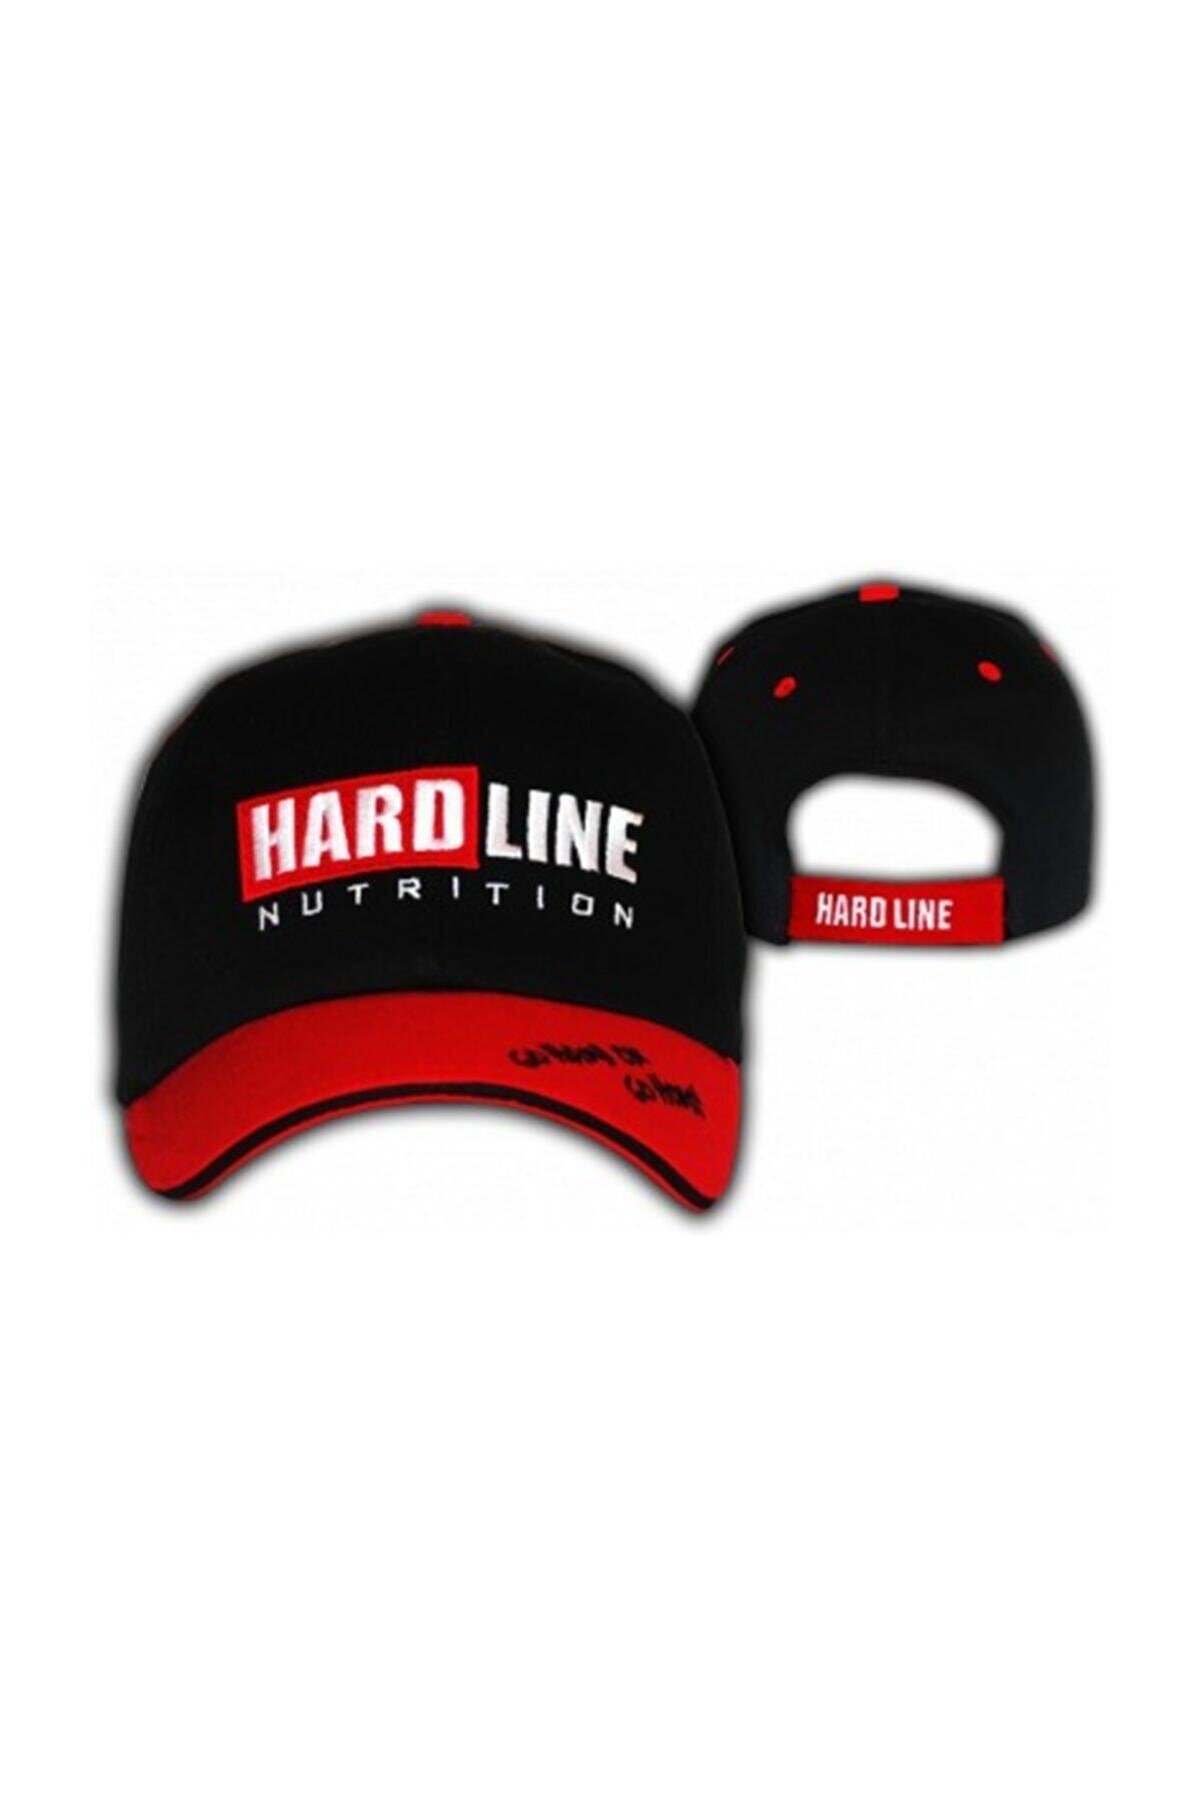 Hardline Nutrition Şapka